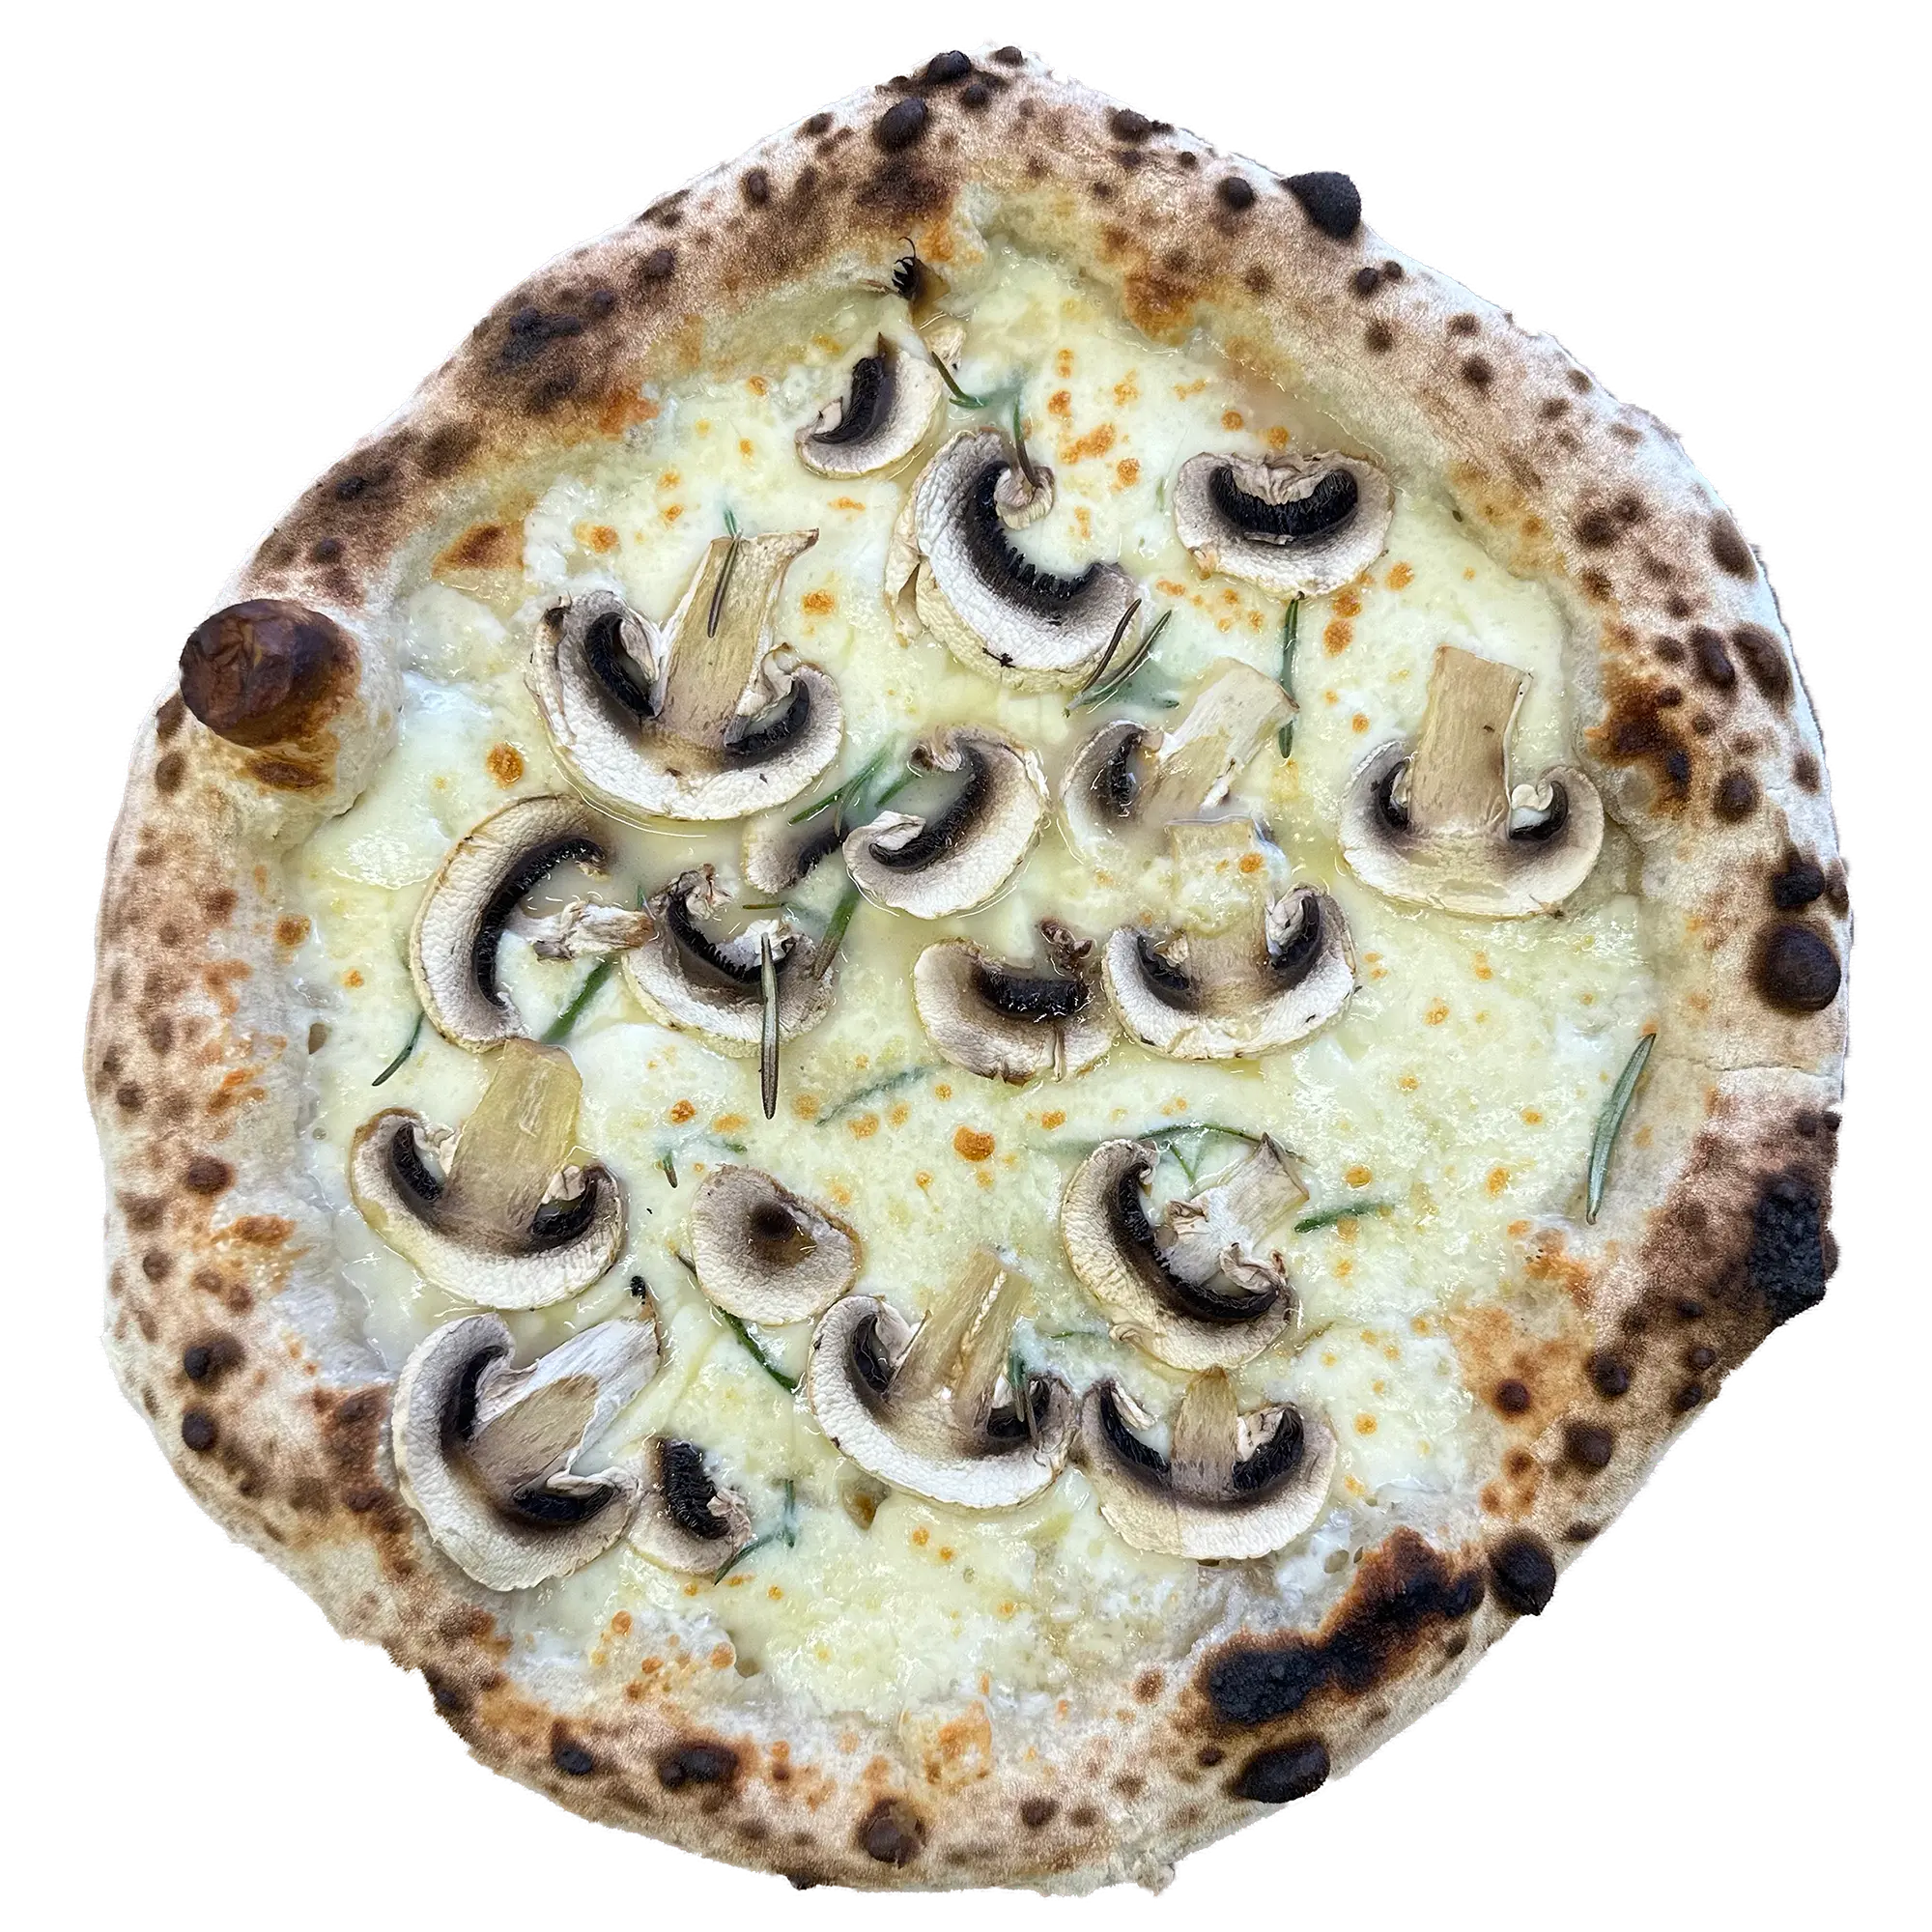 Pizza ROSMARINO FUNGO
    Mozzarella, champignons frais, romarin